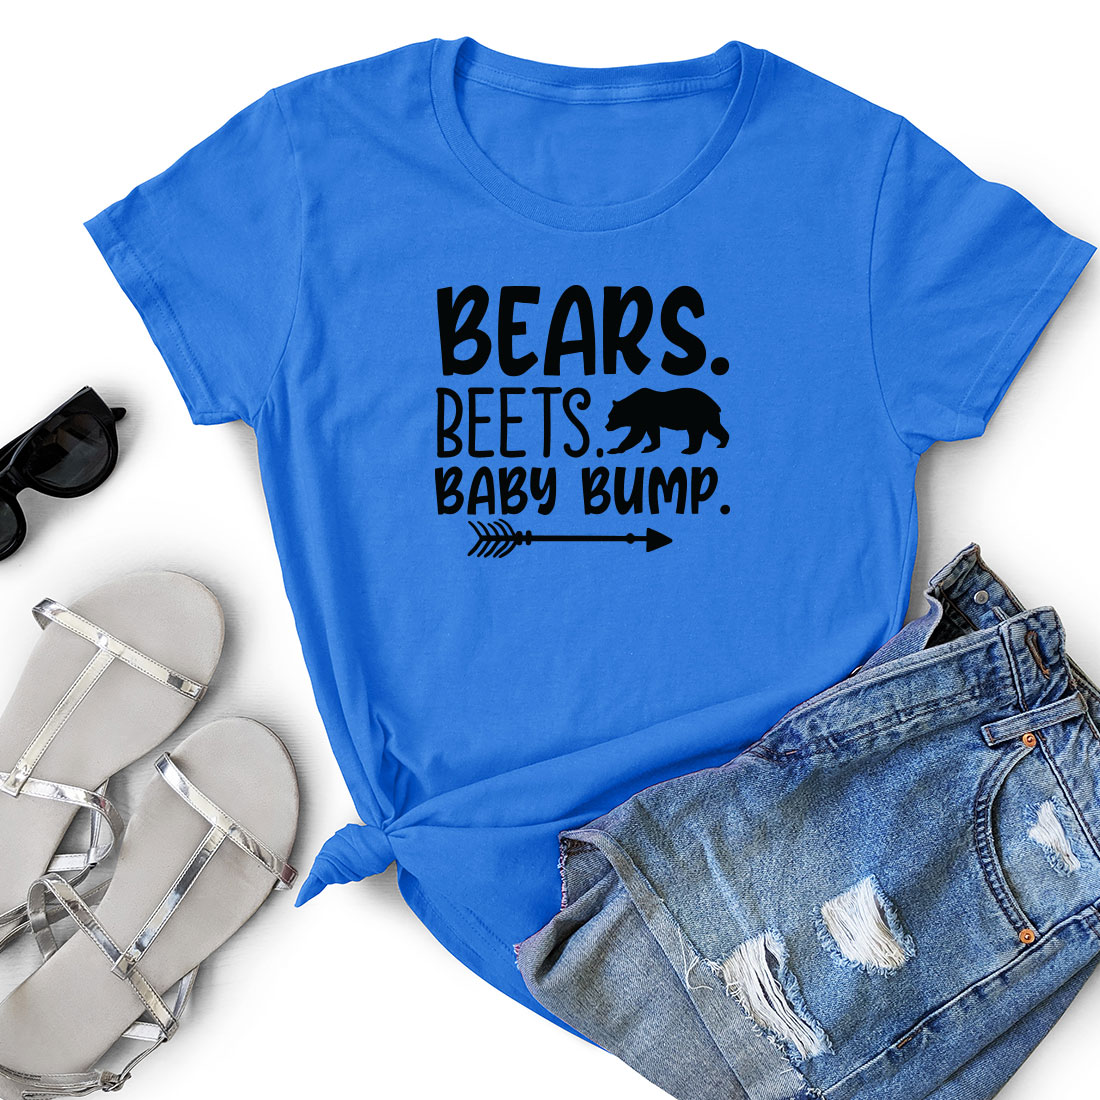 Shirt that says bears beets baby bump.